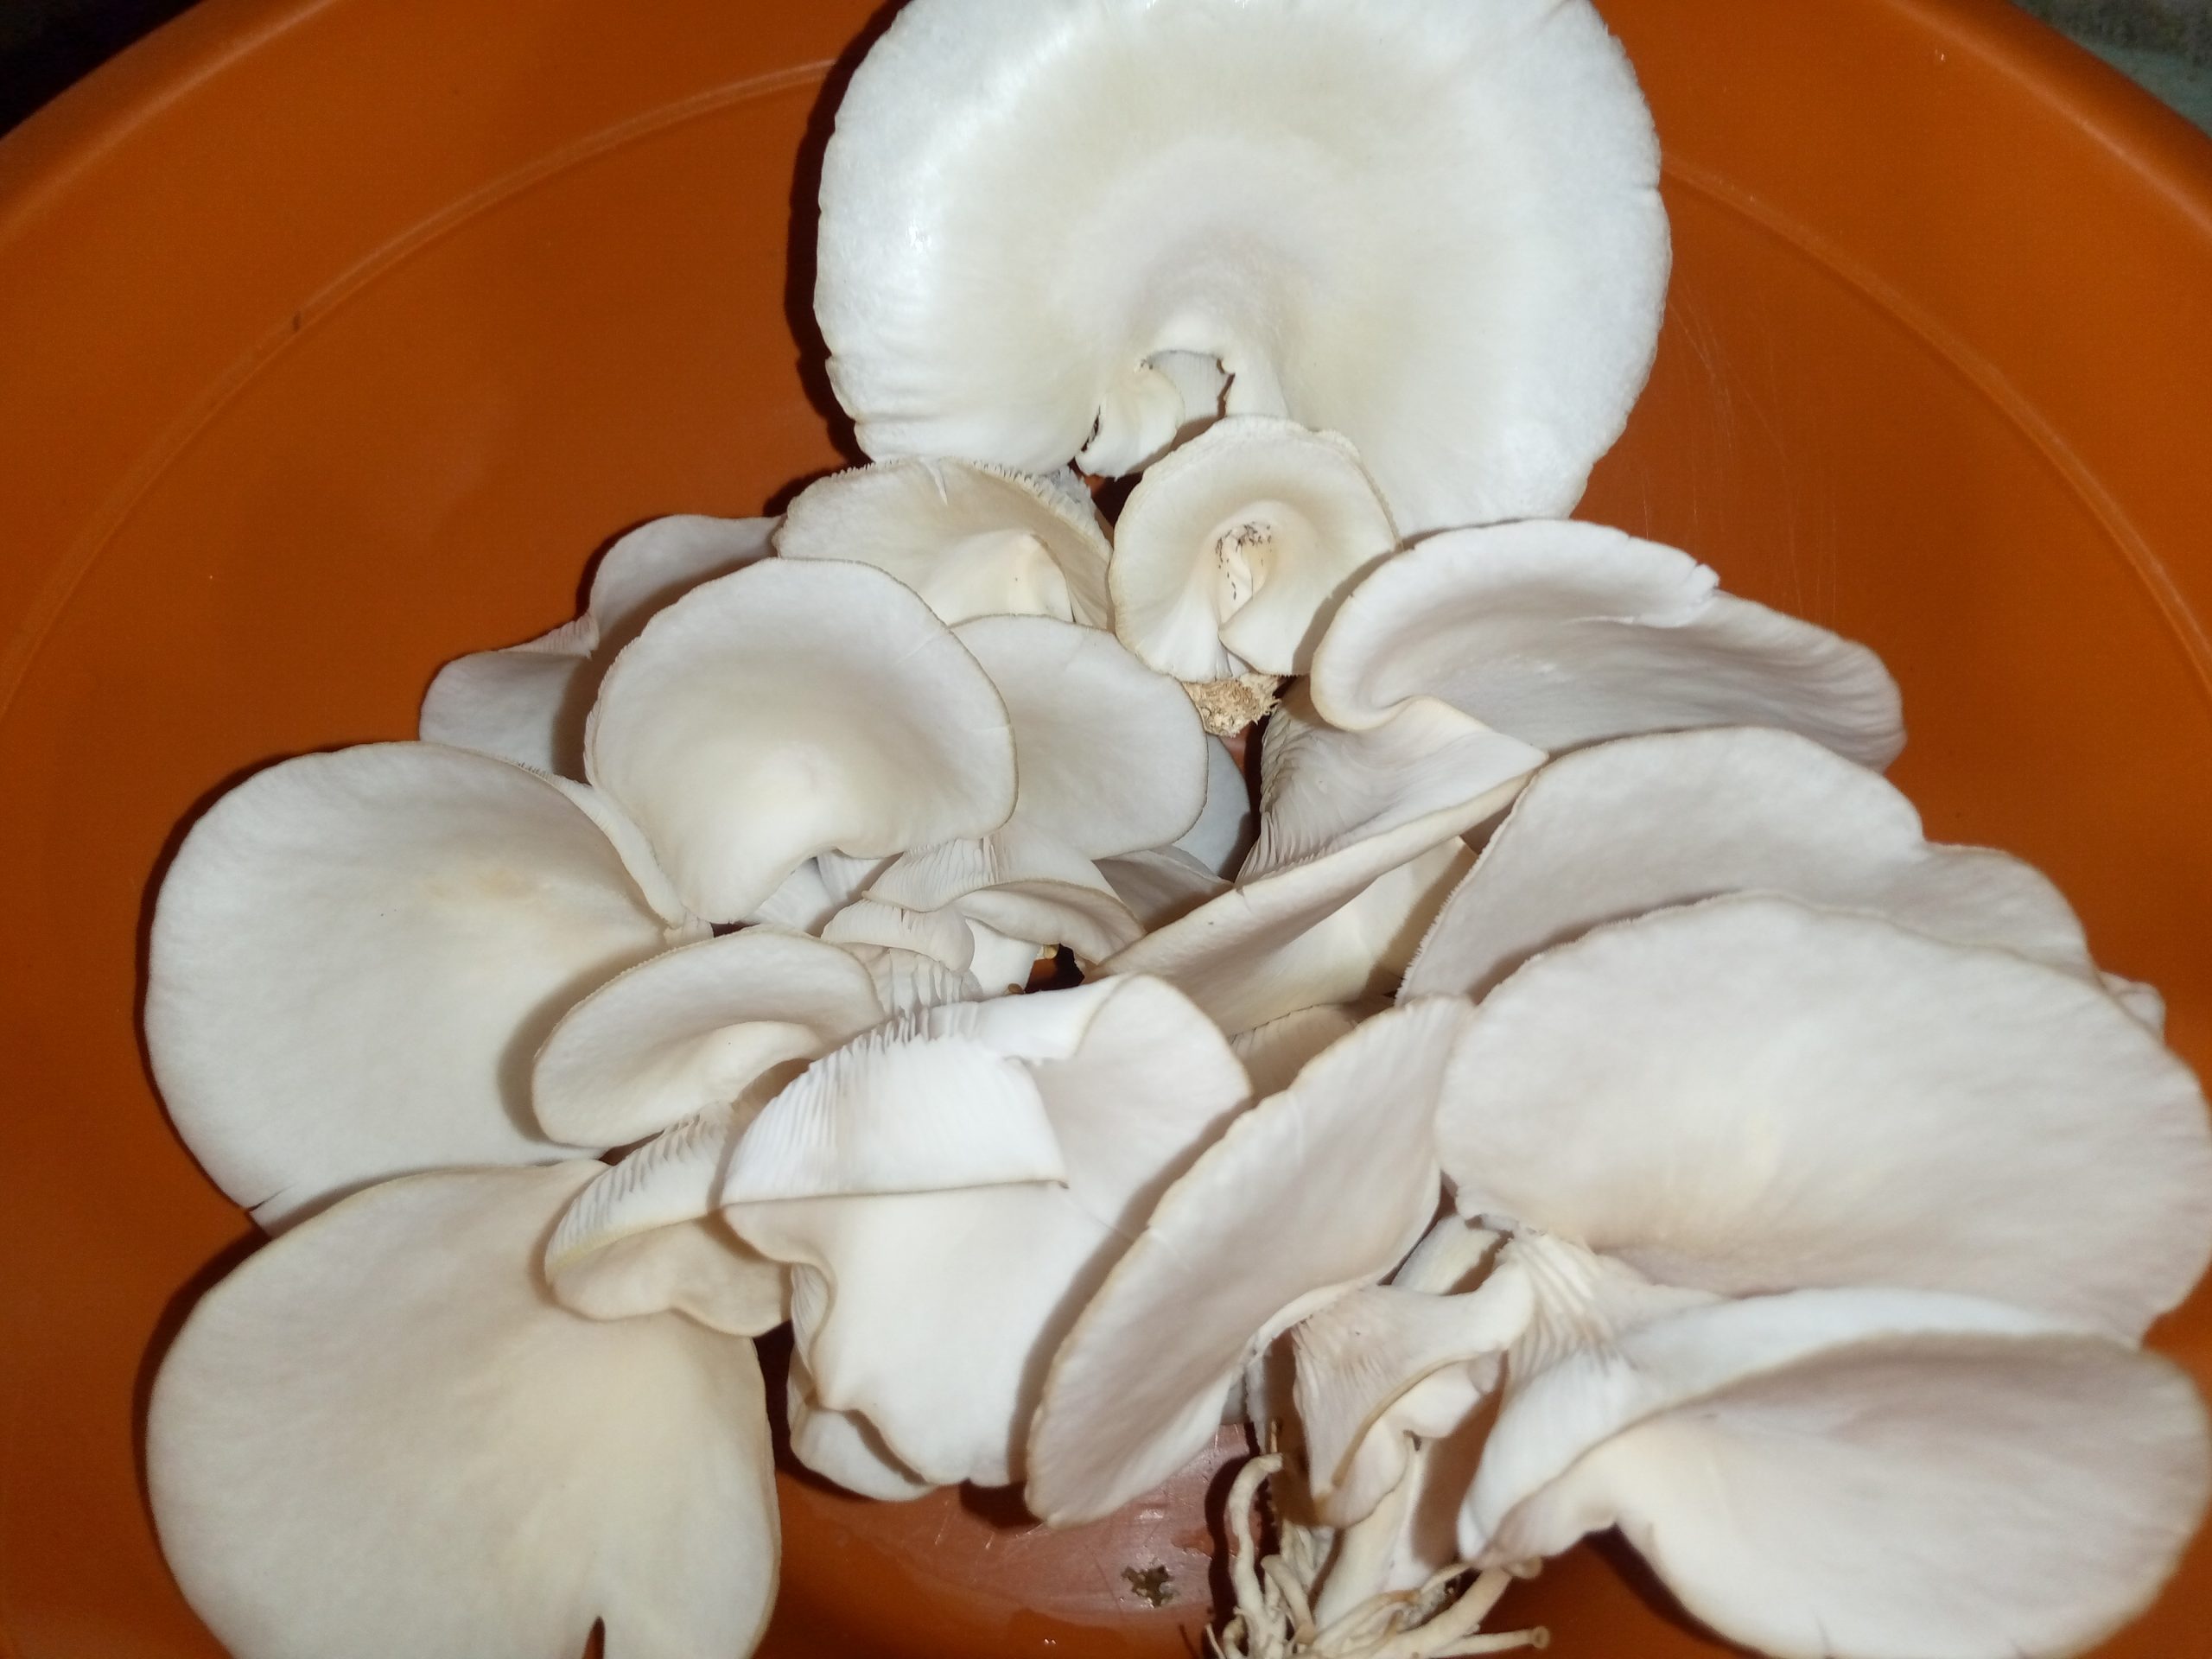 Mushroom farming